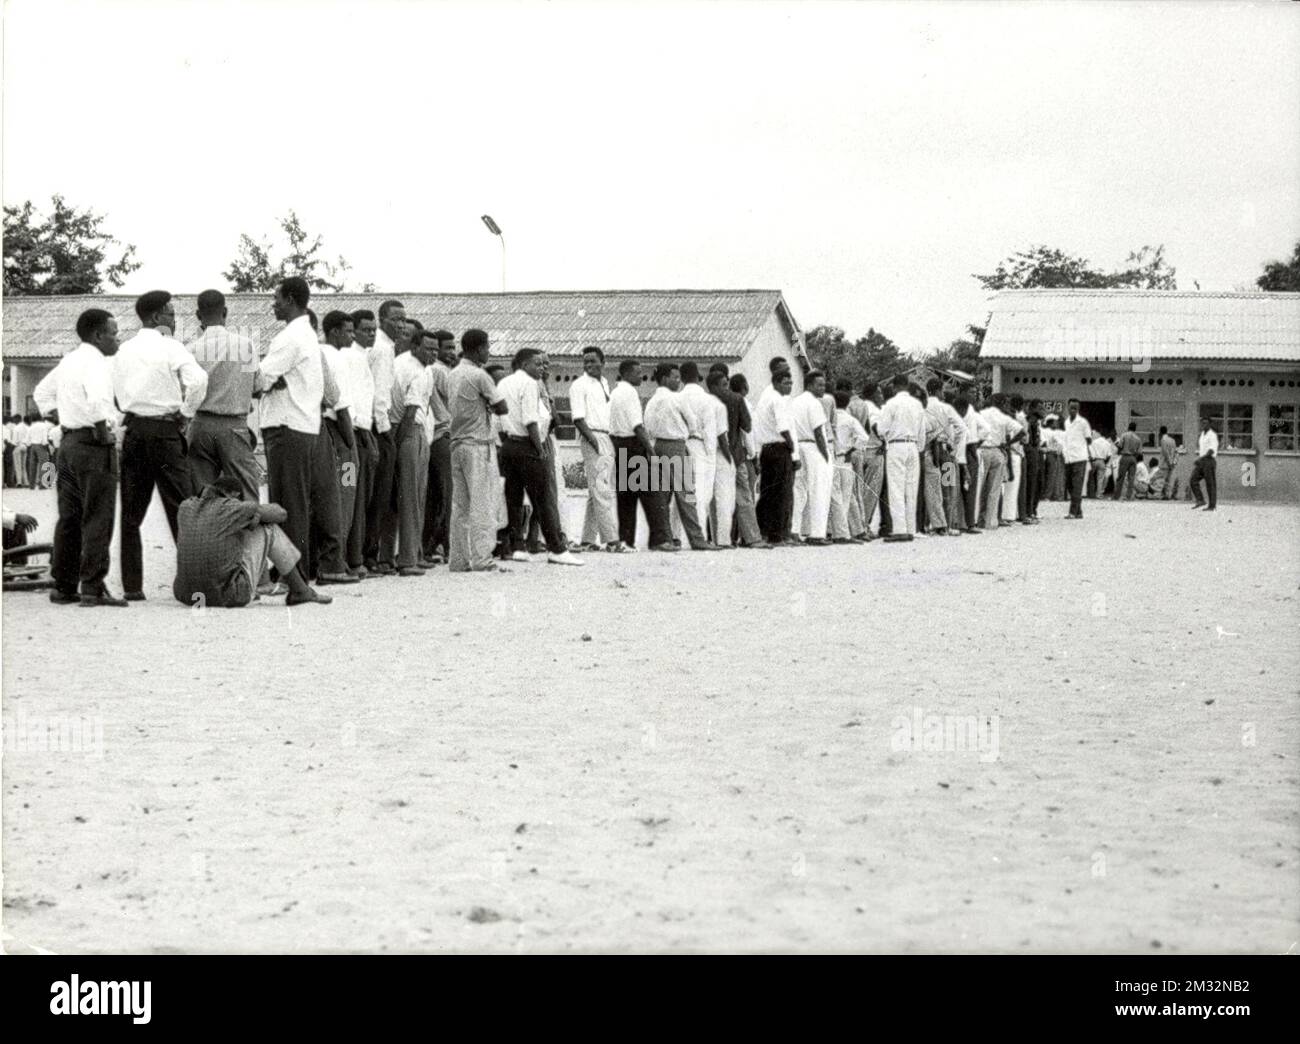 19600630 - LEOPOLDVILLE, CONGO: Men wait in line during election voting on 25 May 1960 in Leopoldville, Congo. Stock Photo